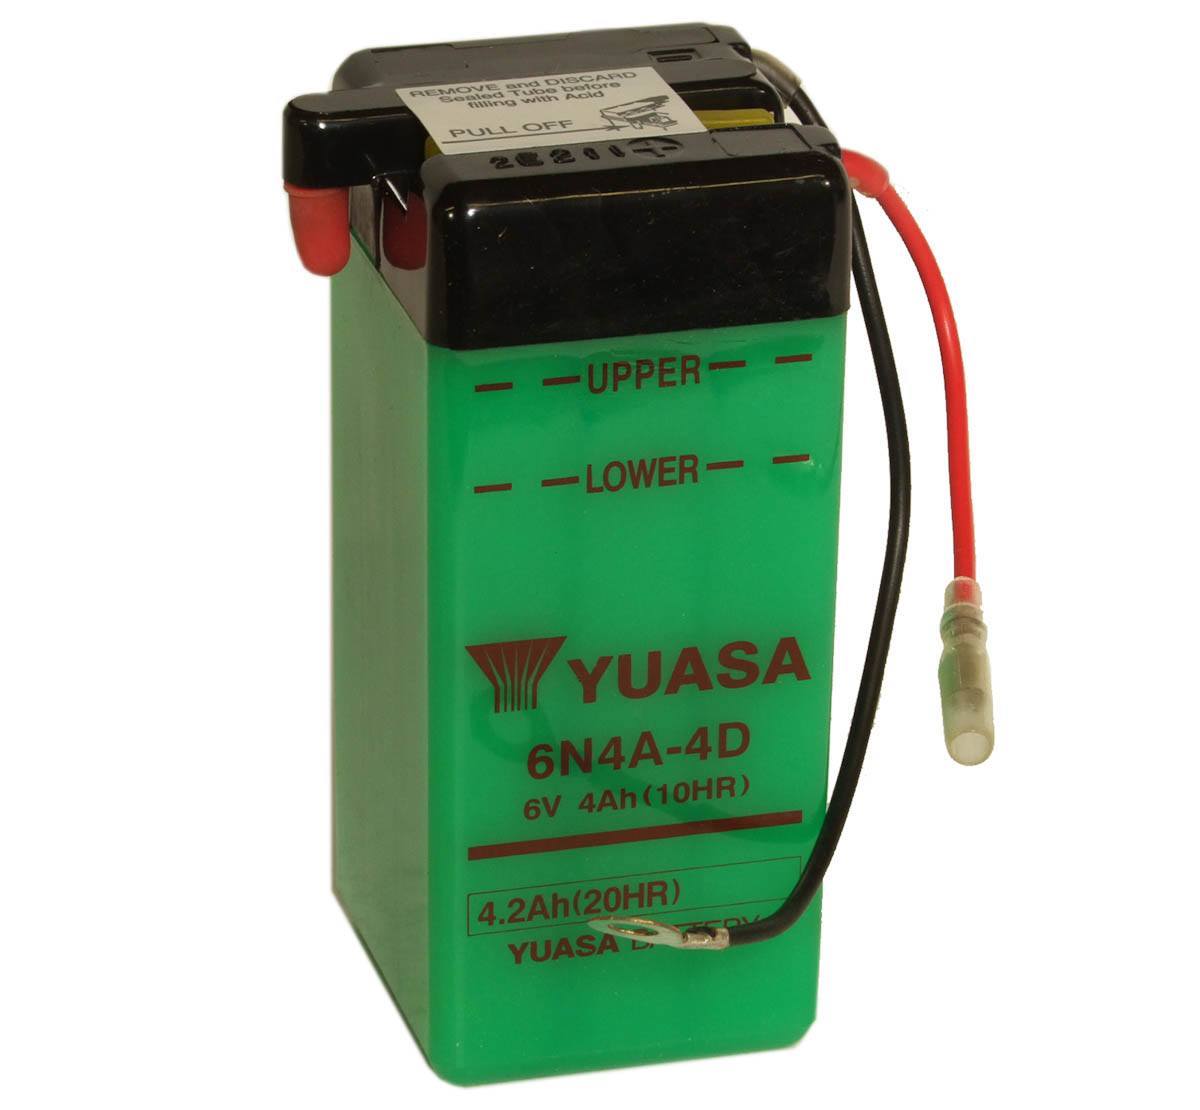 6N4A-4D Yuasa Motorcycle Battery